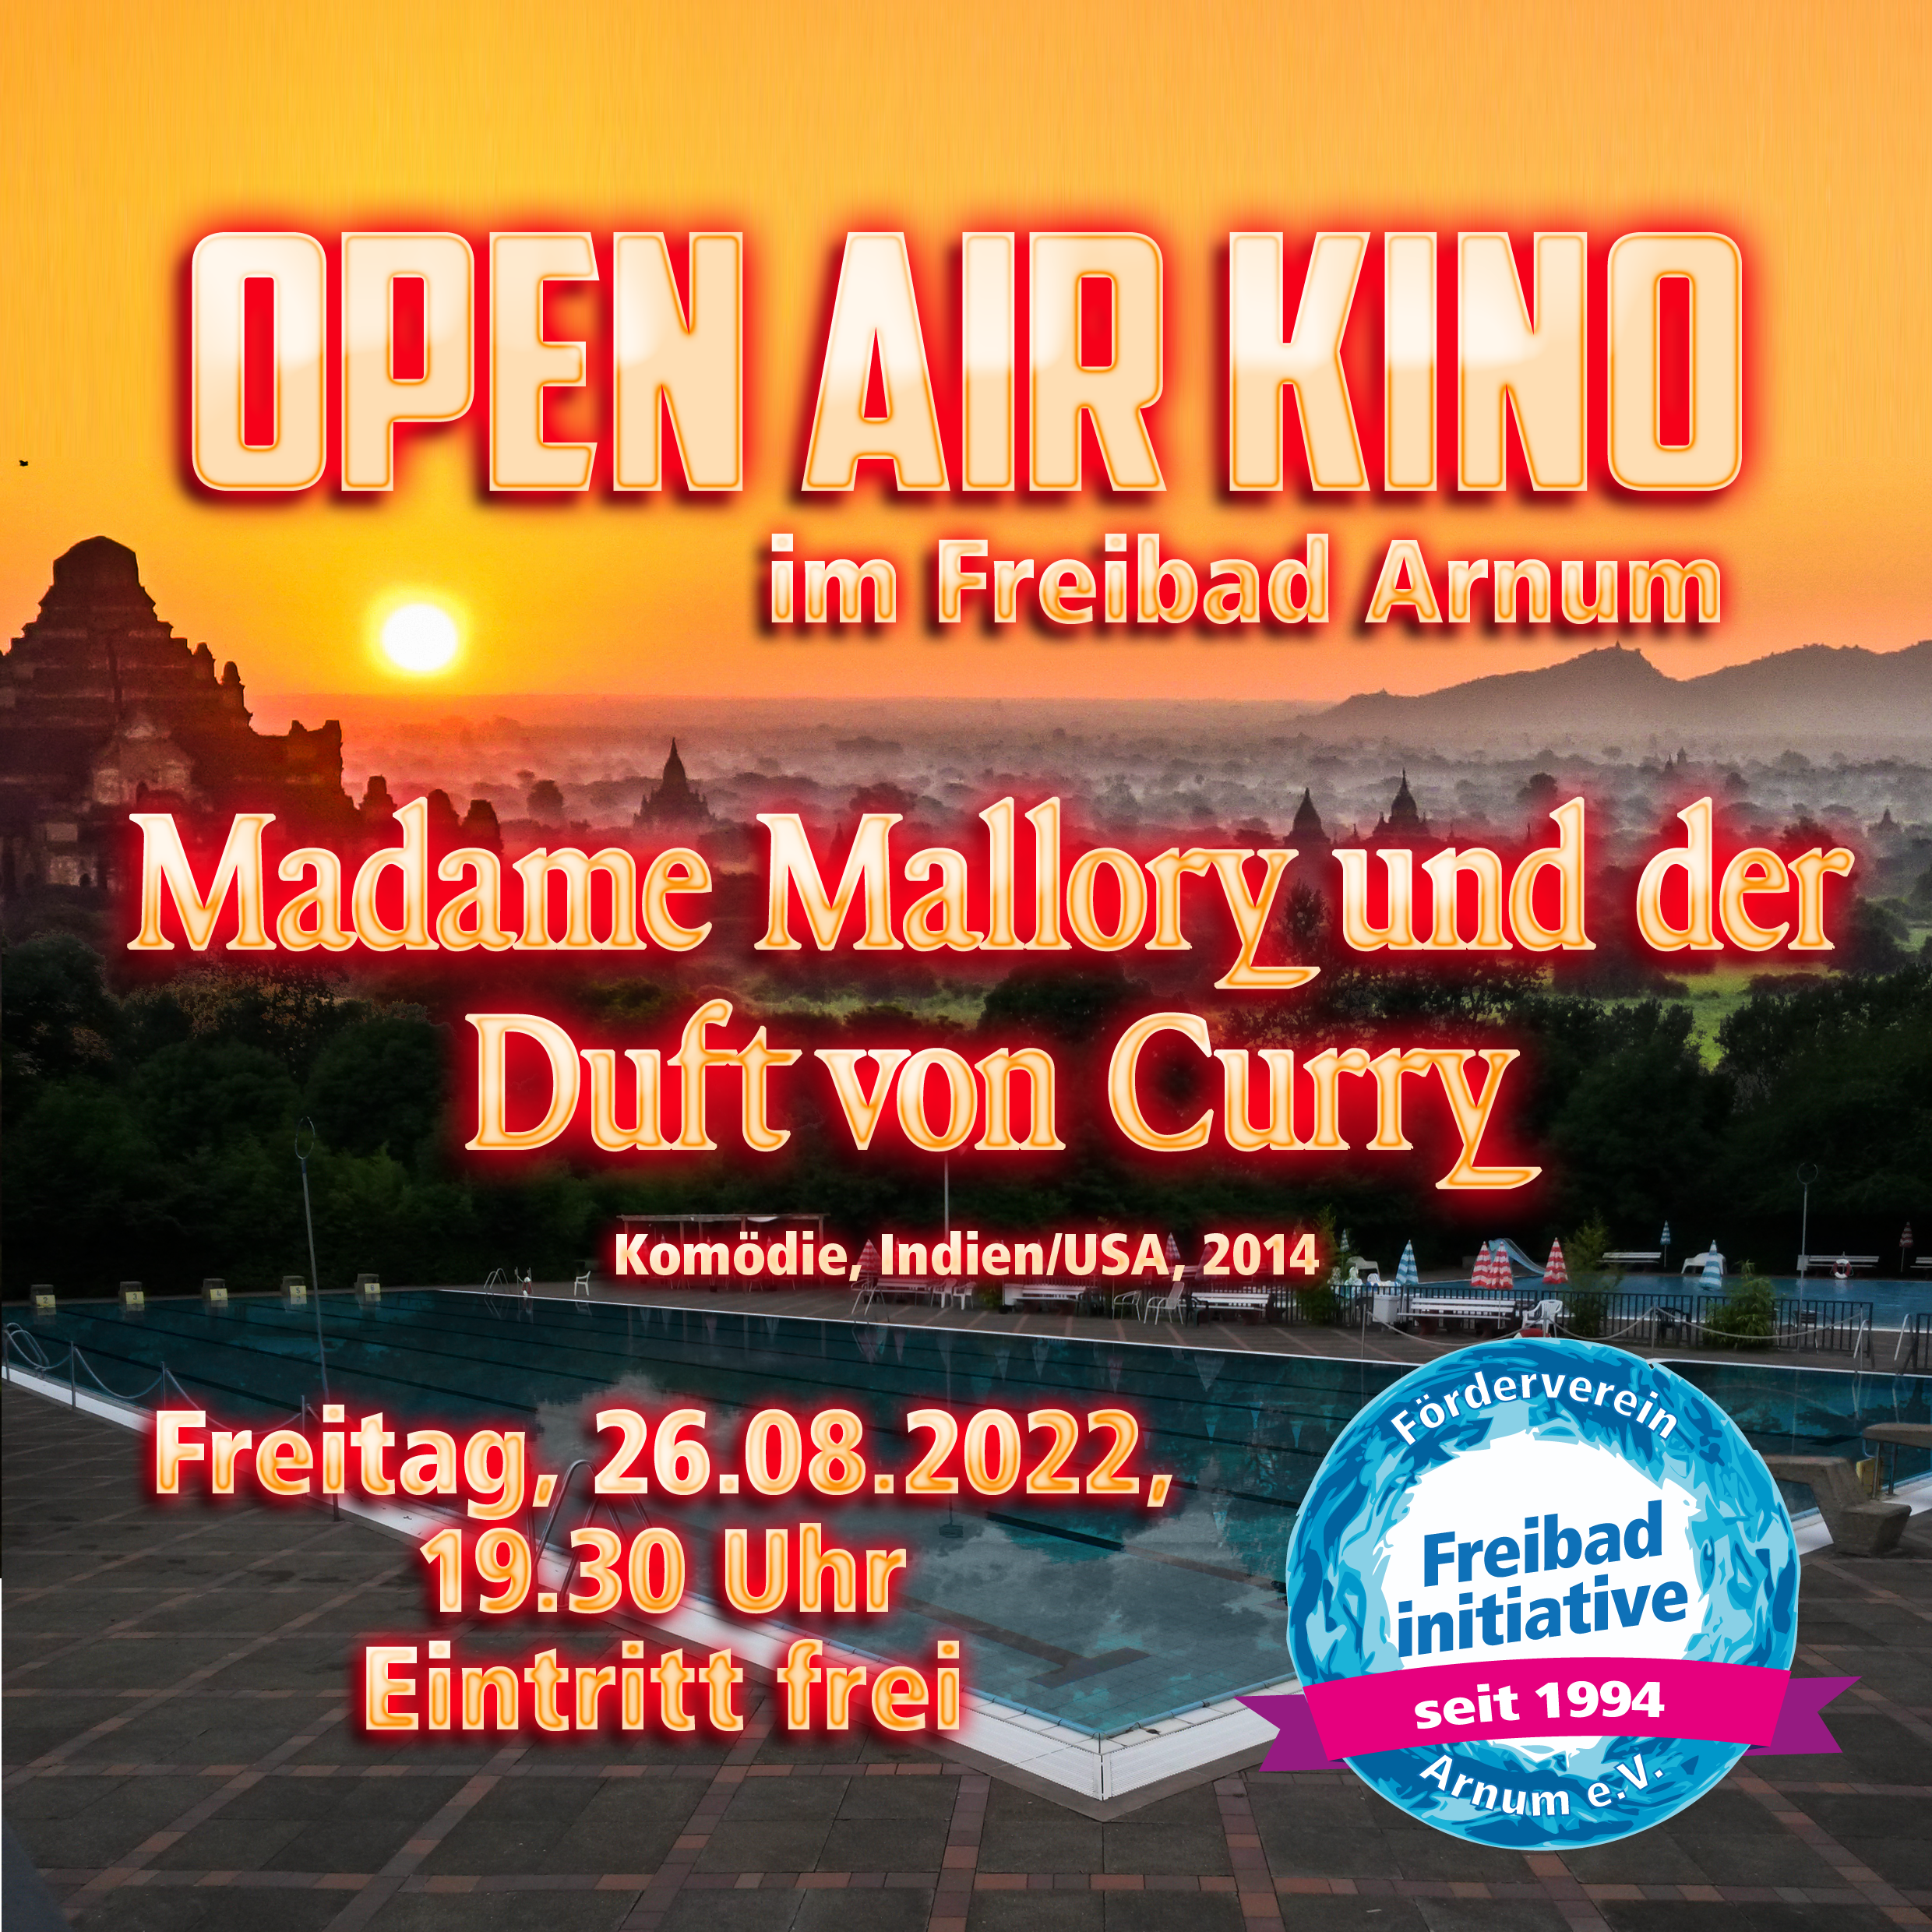 Open-Air-Kino am 26.08.2022